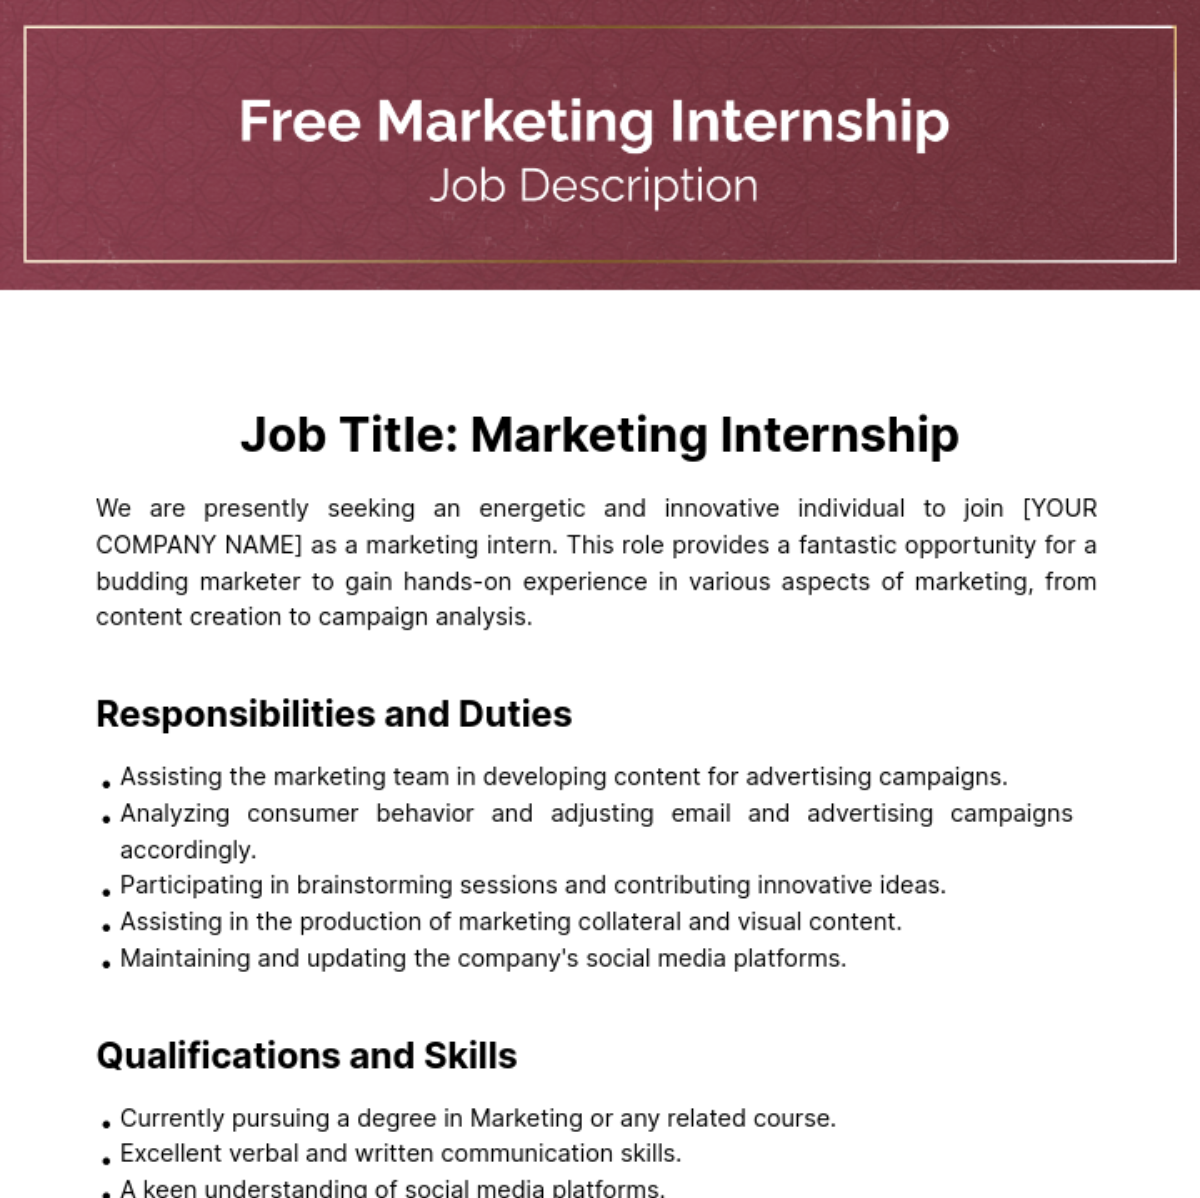 Marketing Internship Job Description Template